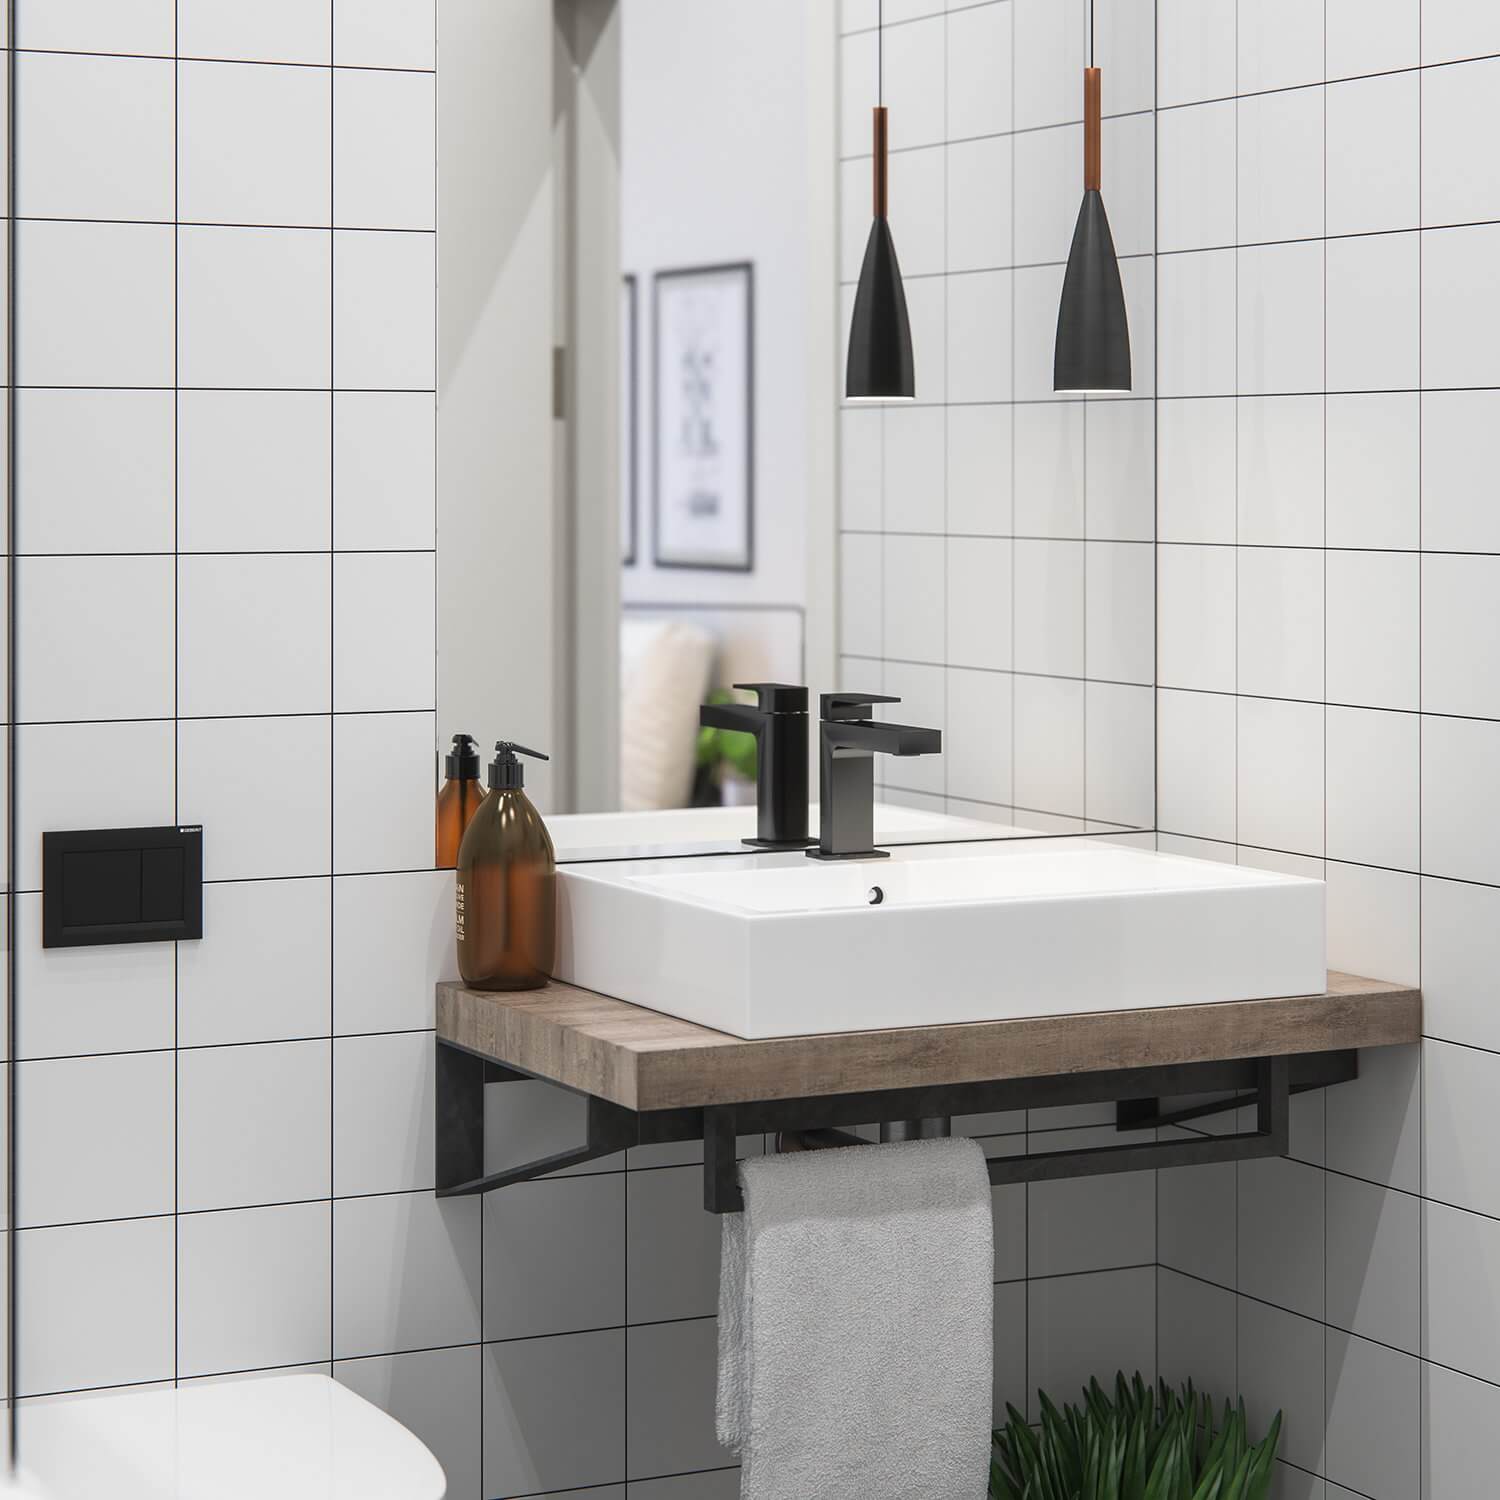 7 Old Town Clapham Apartment bathroom sink - cgi visualization